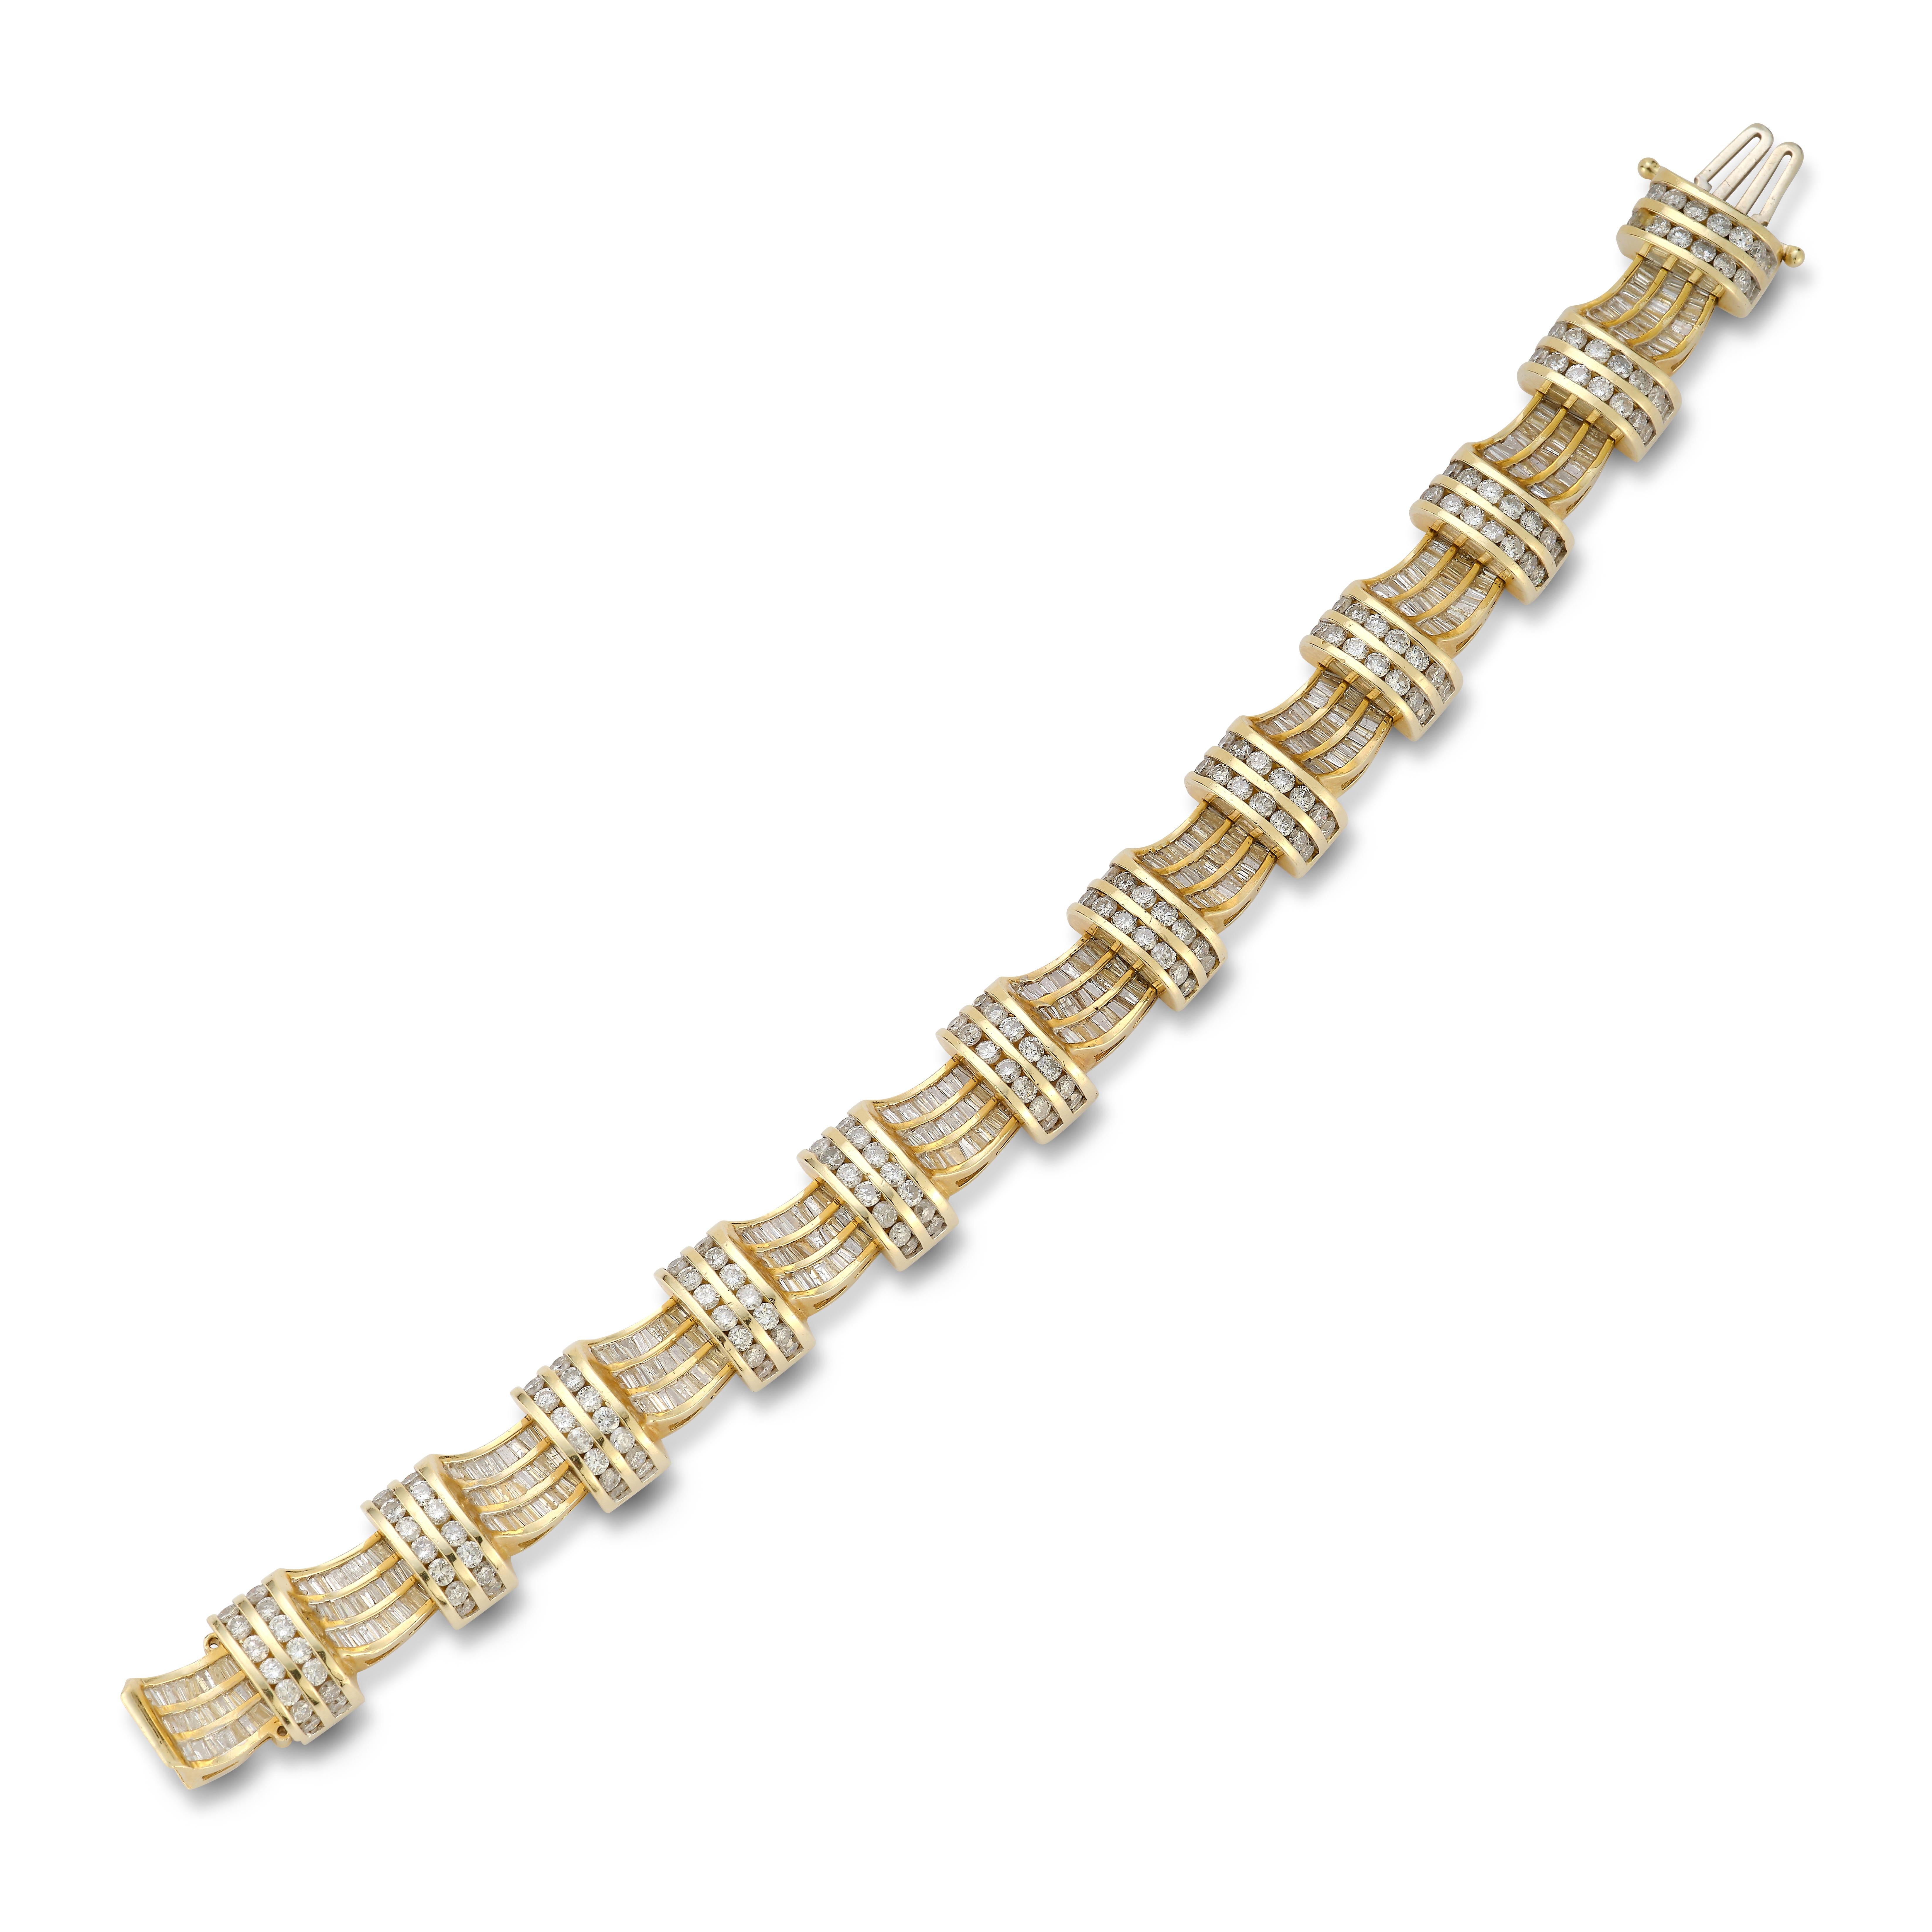 Men's Diamond Bracelet 

Approx 8 ct of diamonds

14 karat gold

Made circa 1970

7.50 inches long